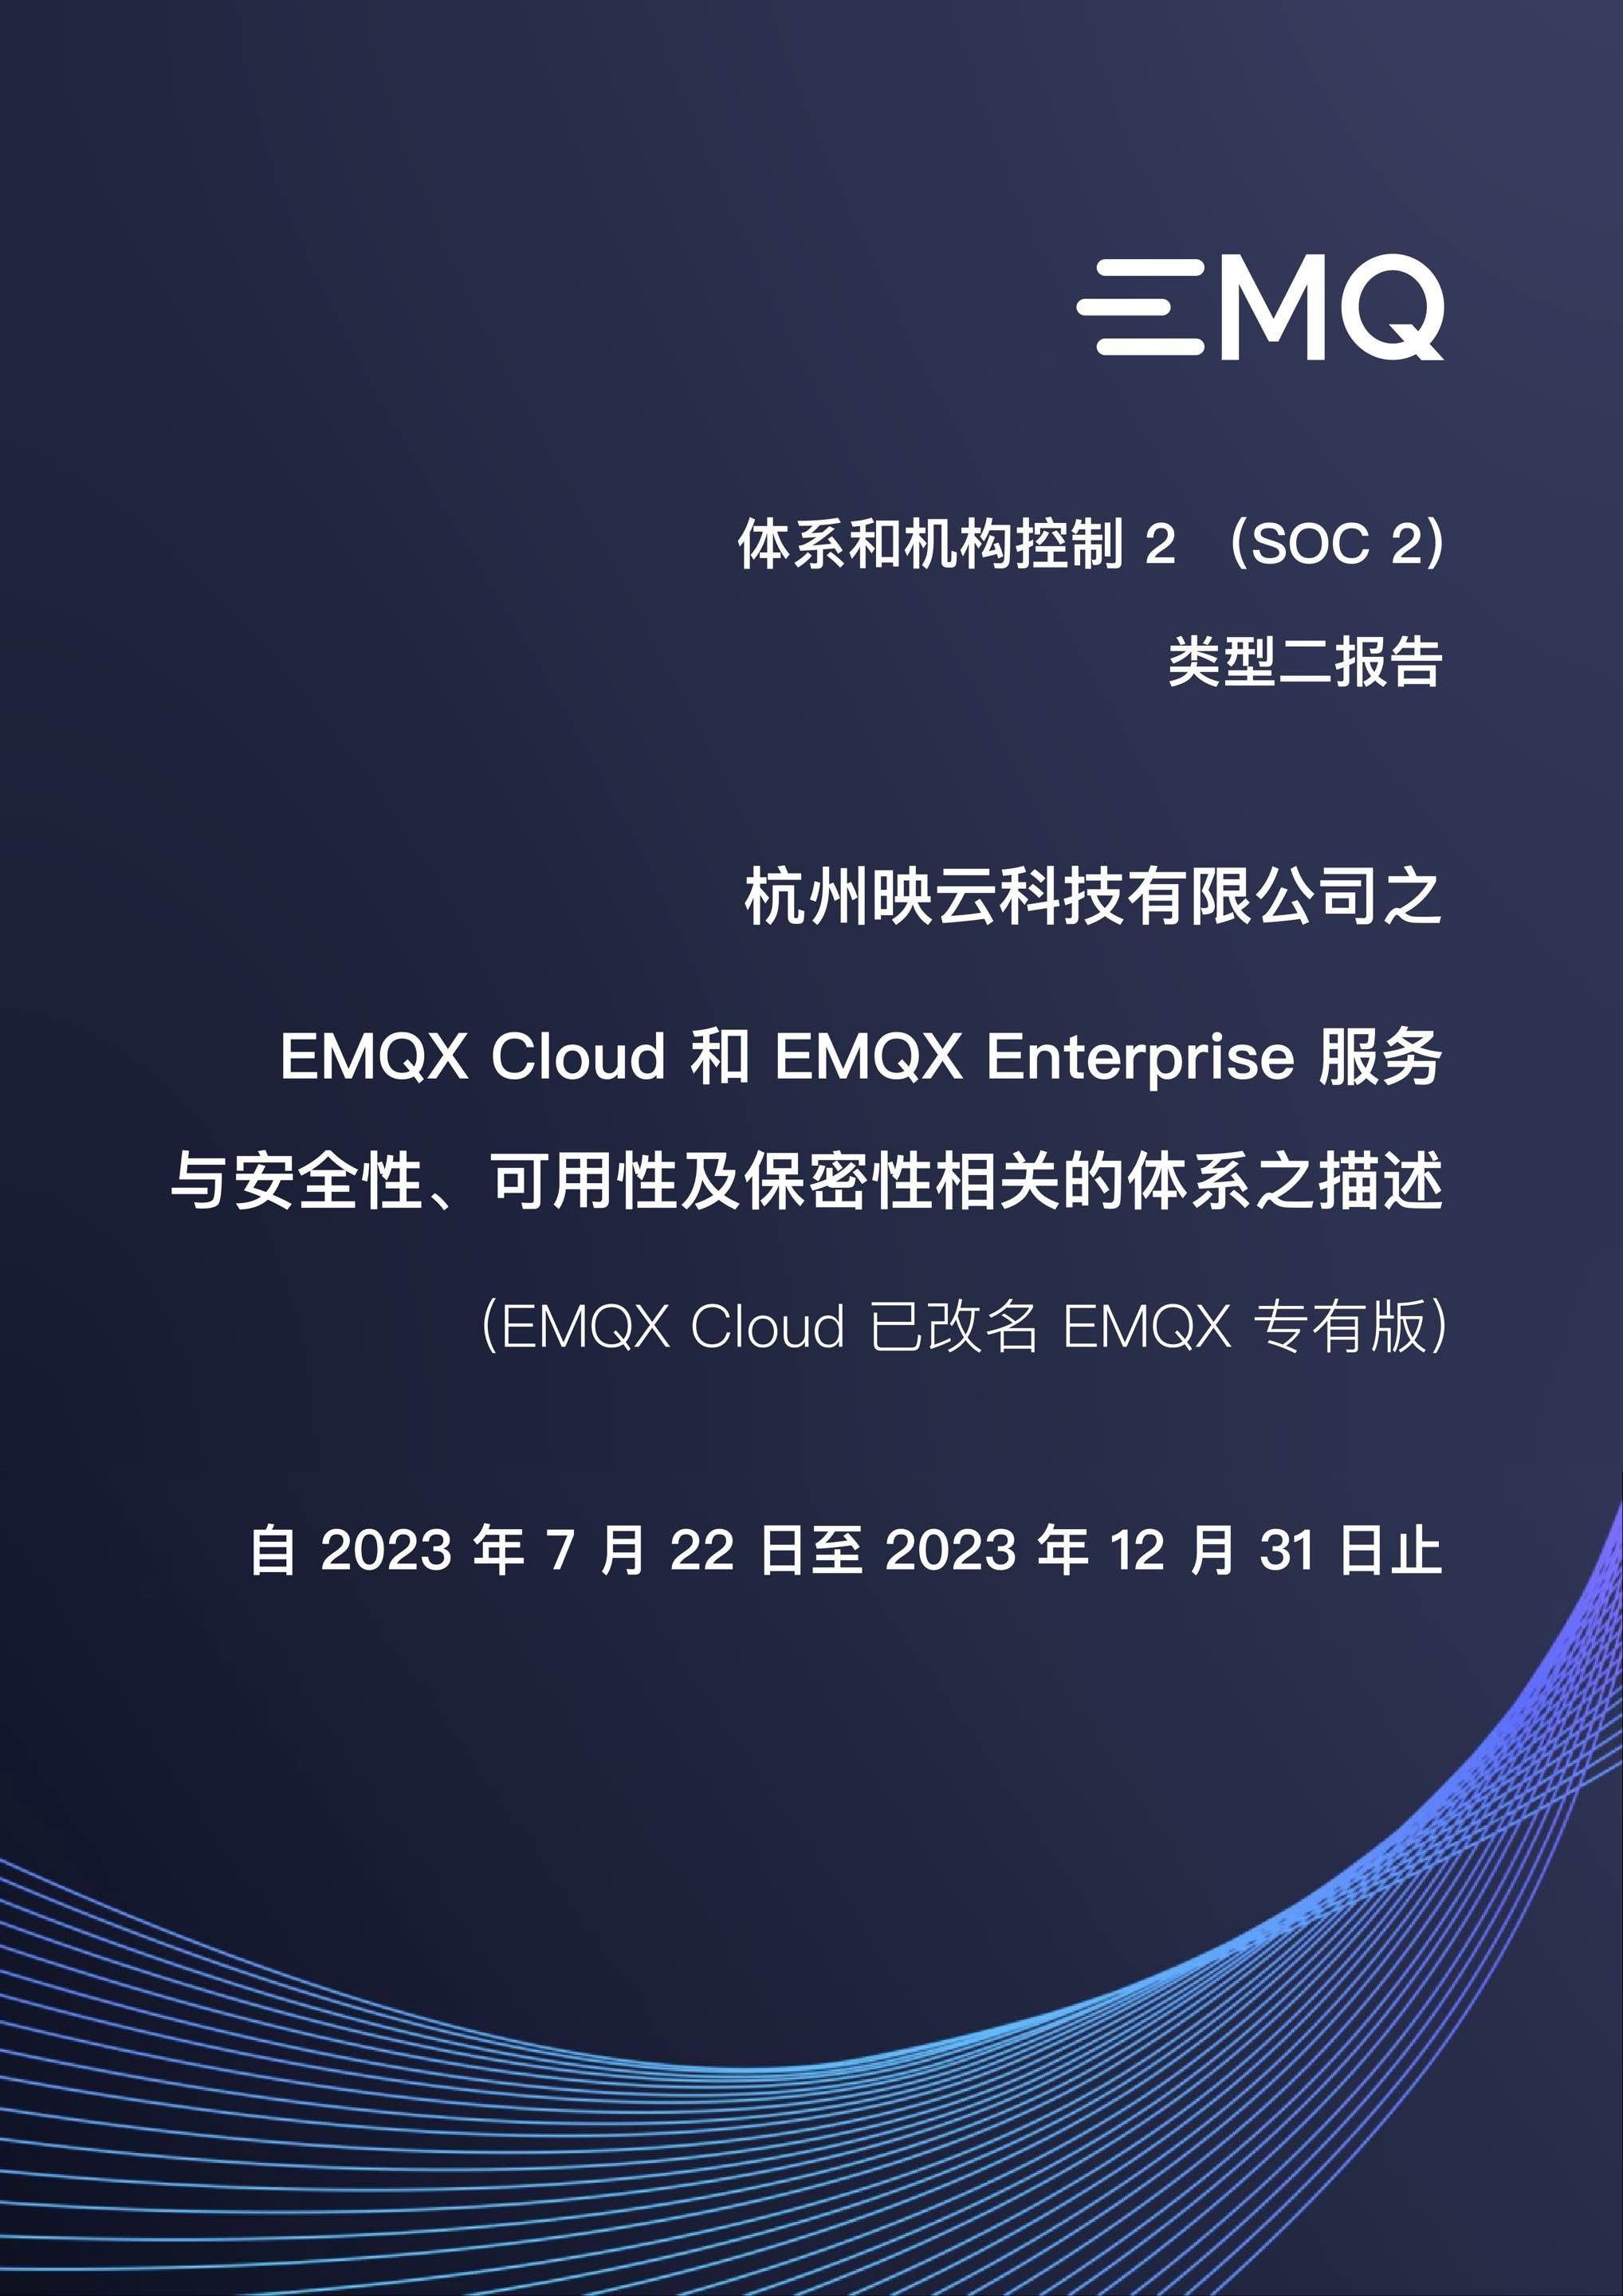 EMQ 获得全球数据安全合规 SOC 2 Type Ⅱ 认证